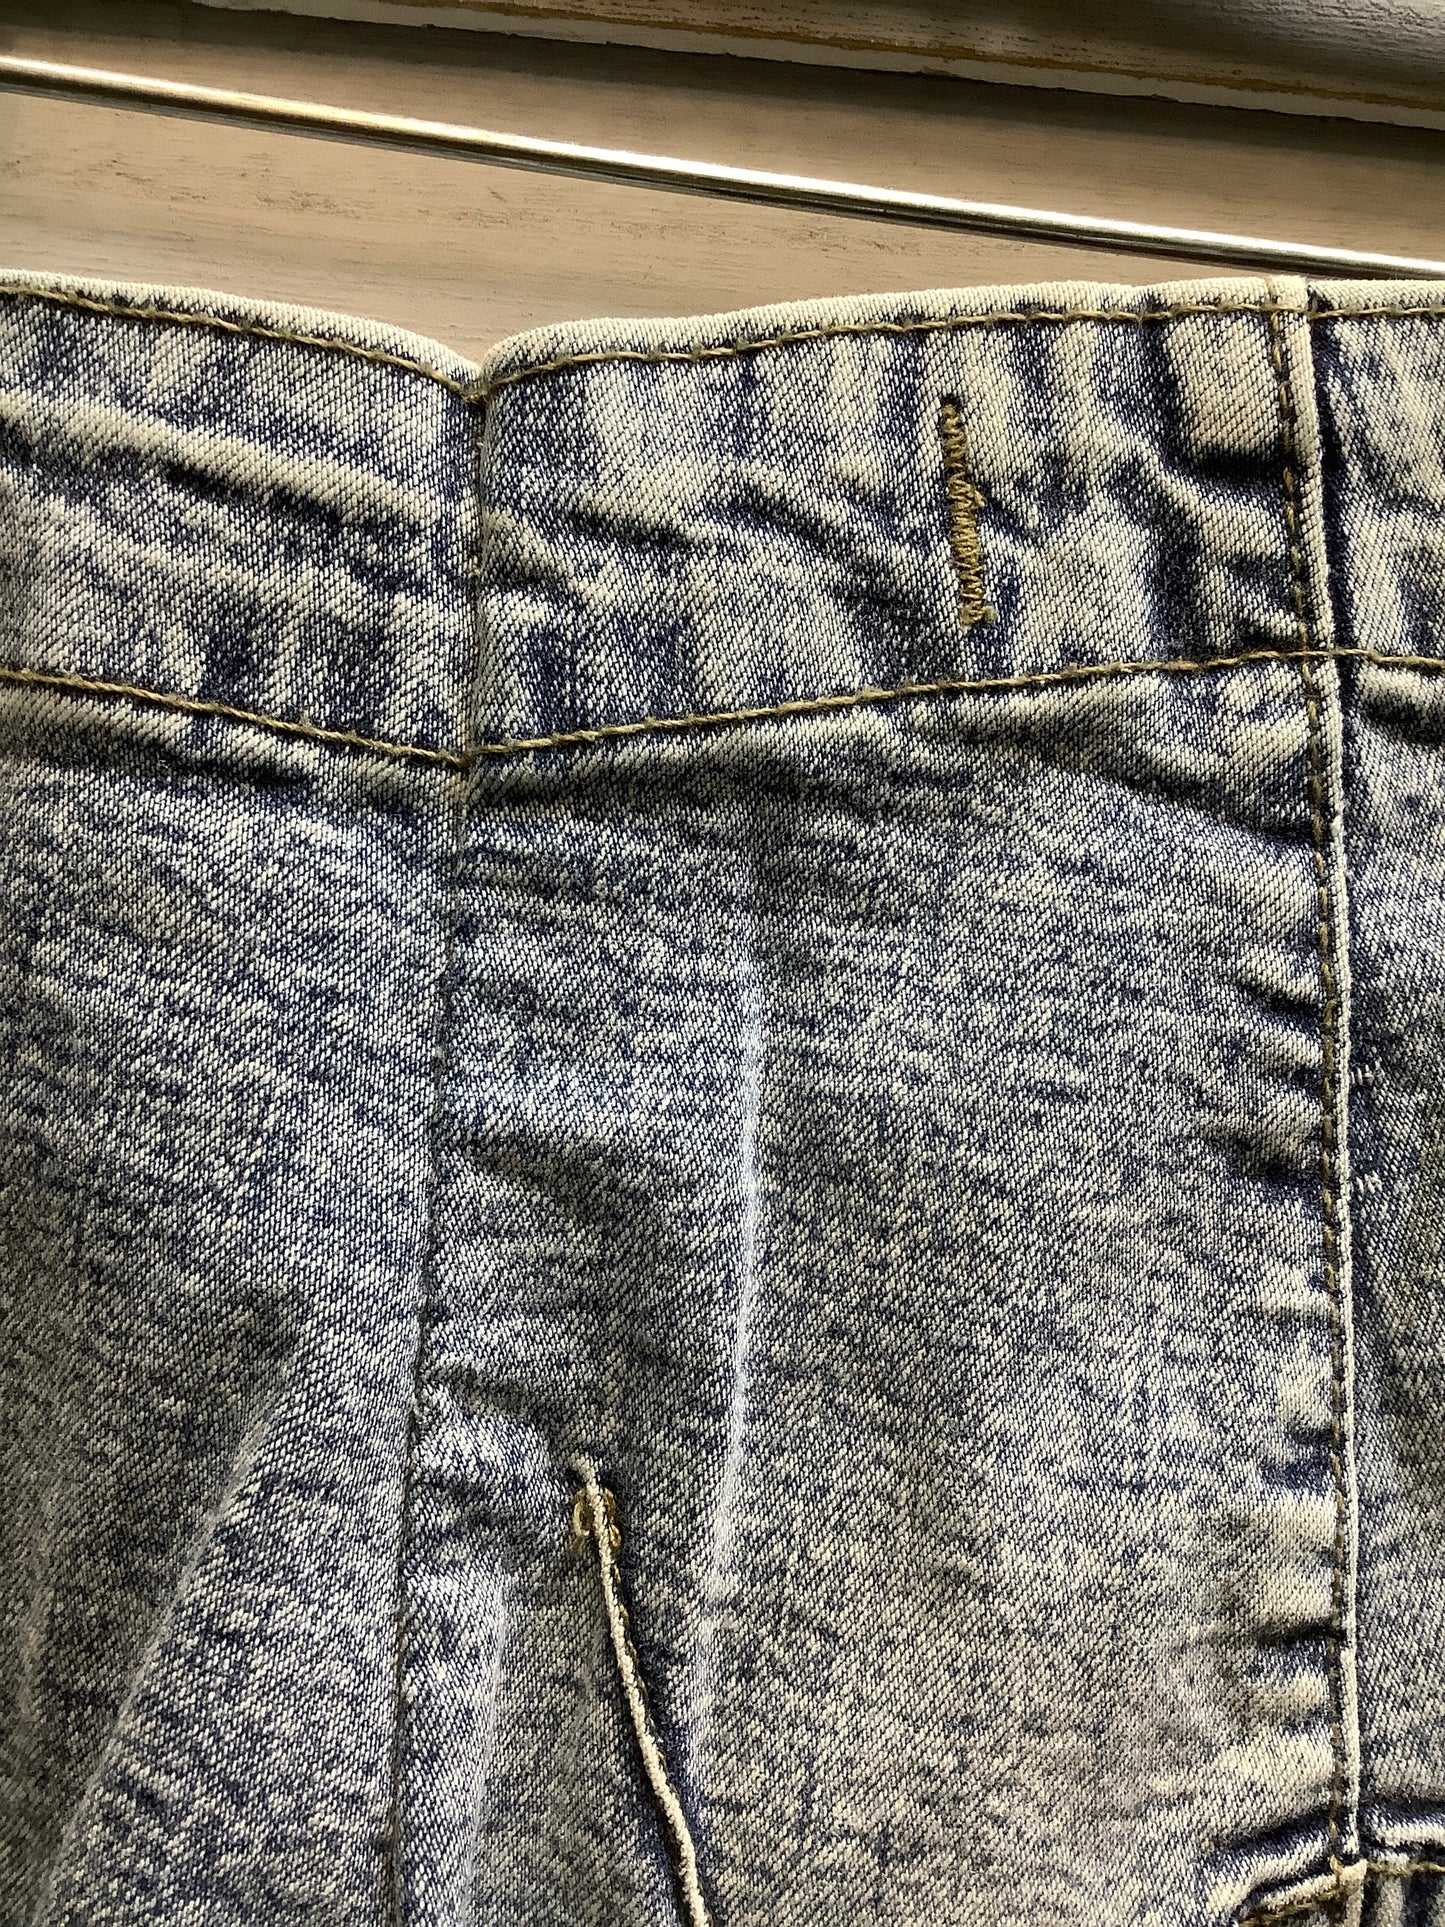 Blue Denim Jeans Flared Clothes Mentor, Size 8